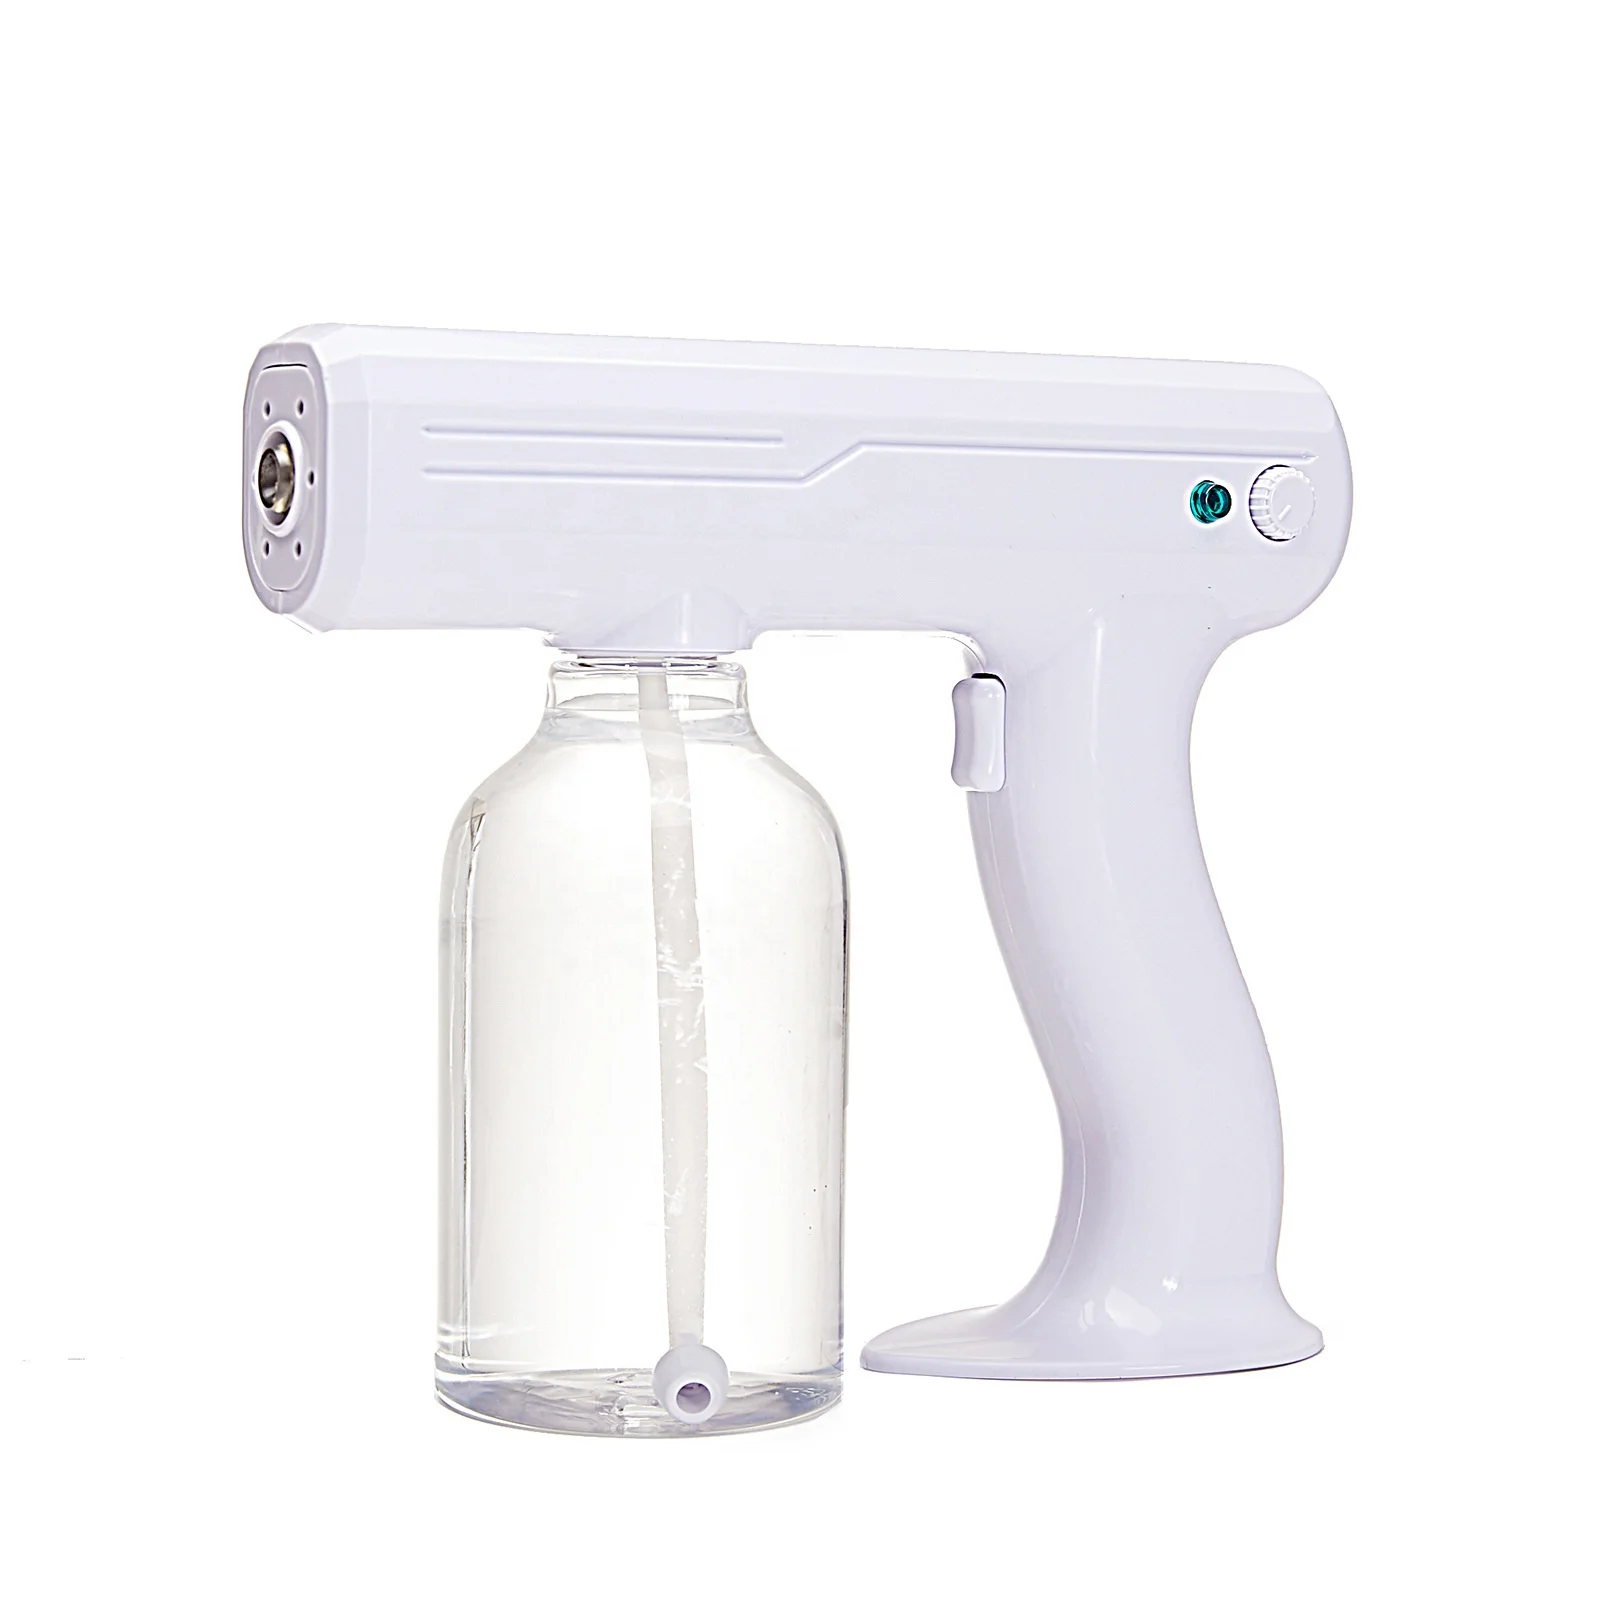 

Rechargeable Automatic Alcohol Disinfection Fogging Machine Sprayer, Electrostatic Fogger Nanomist Sprayer Gun Disinfection, White